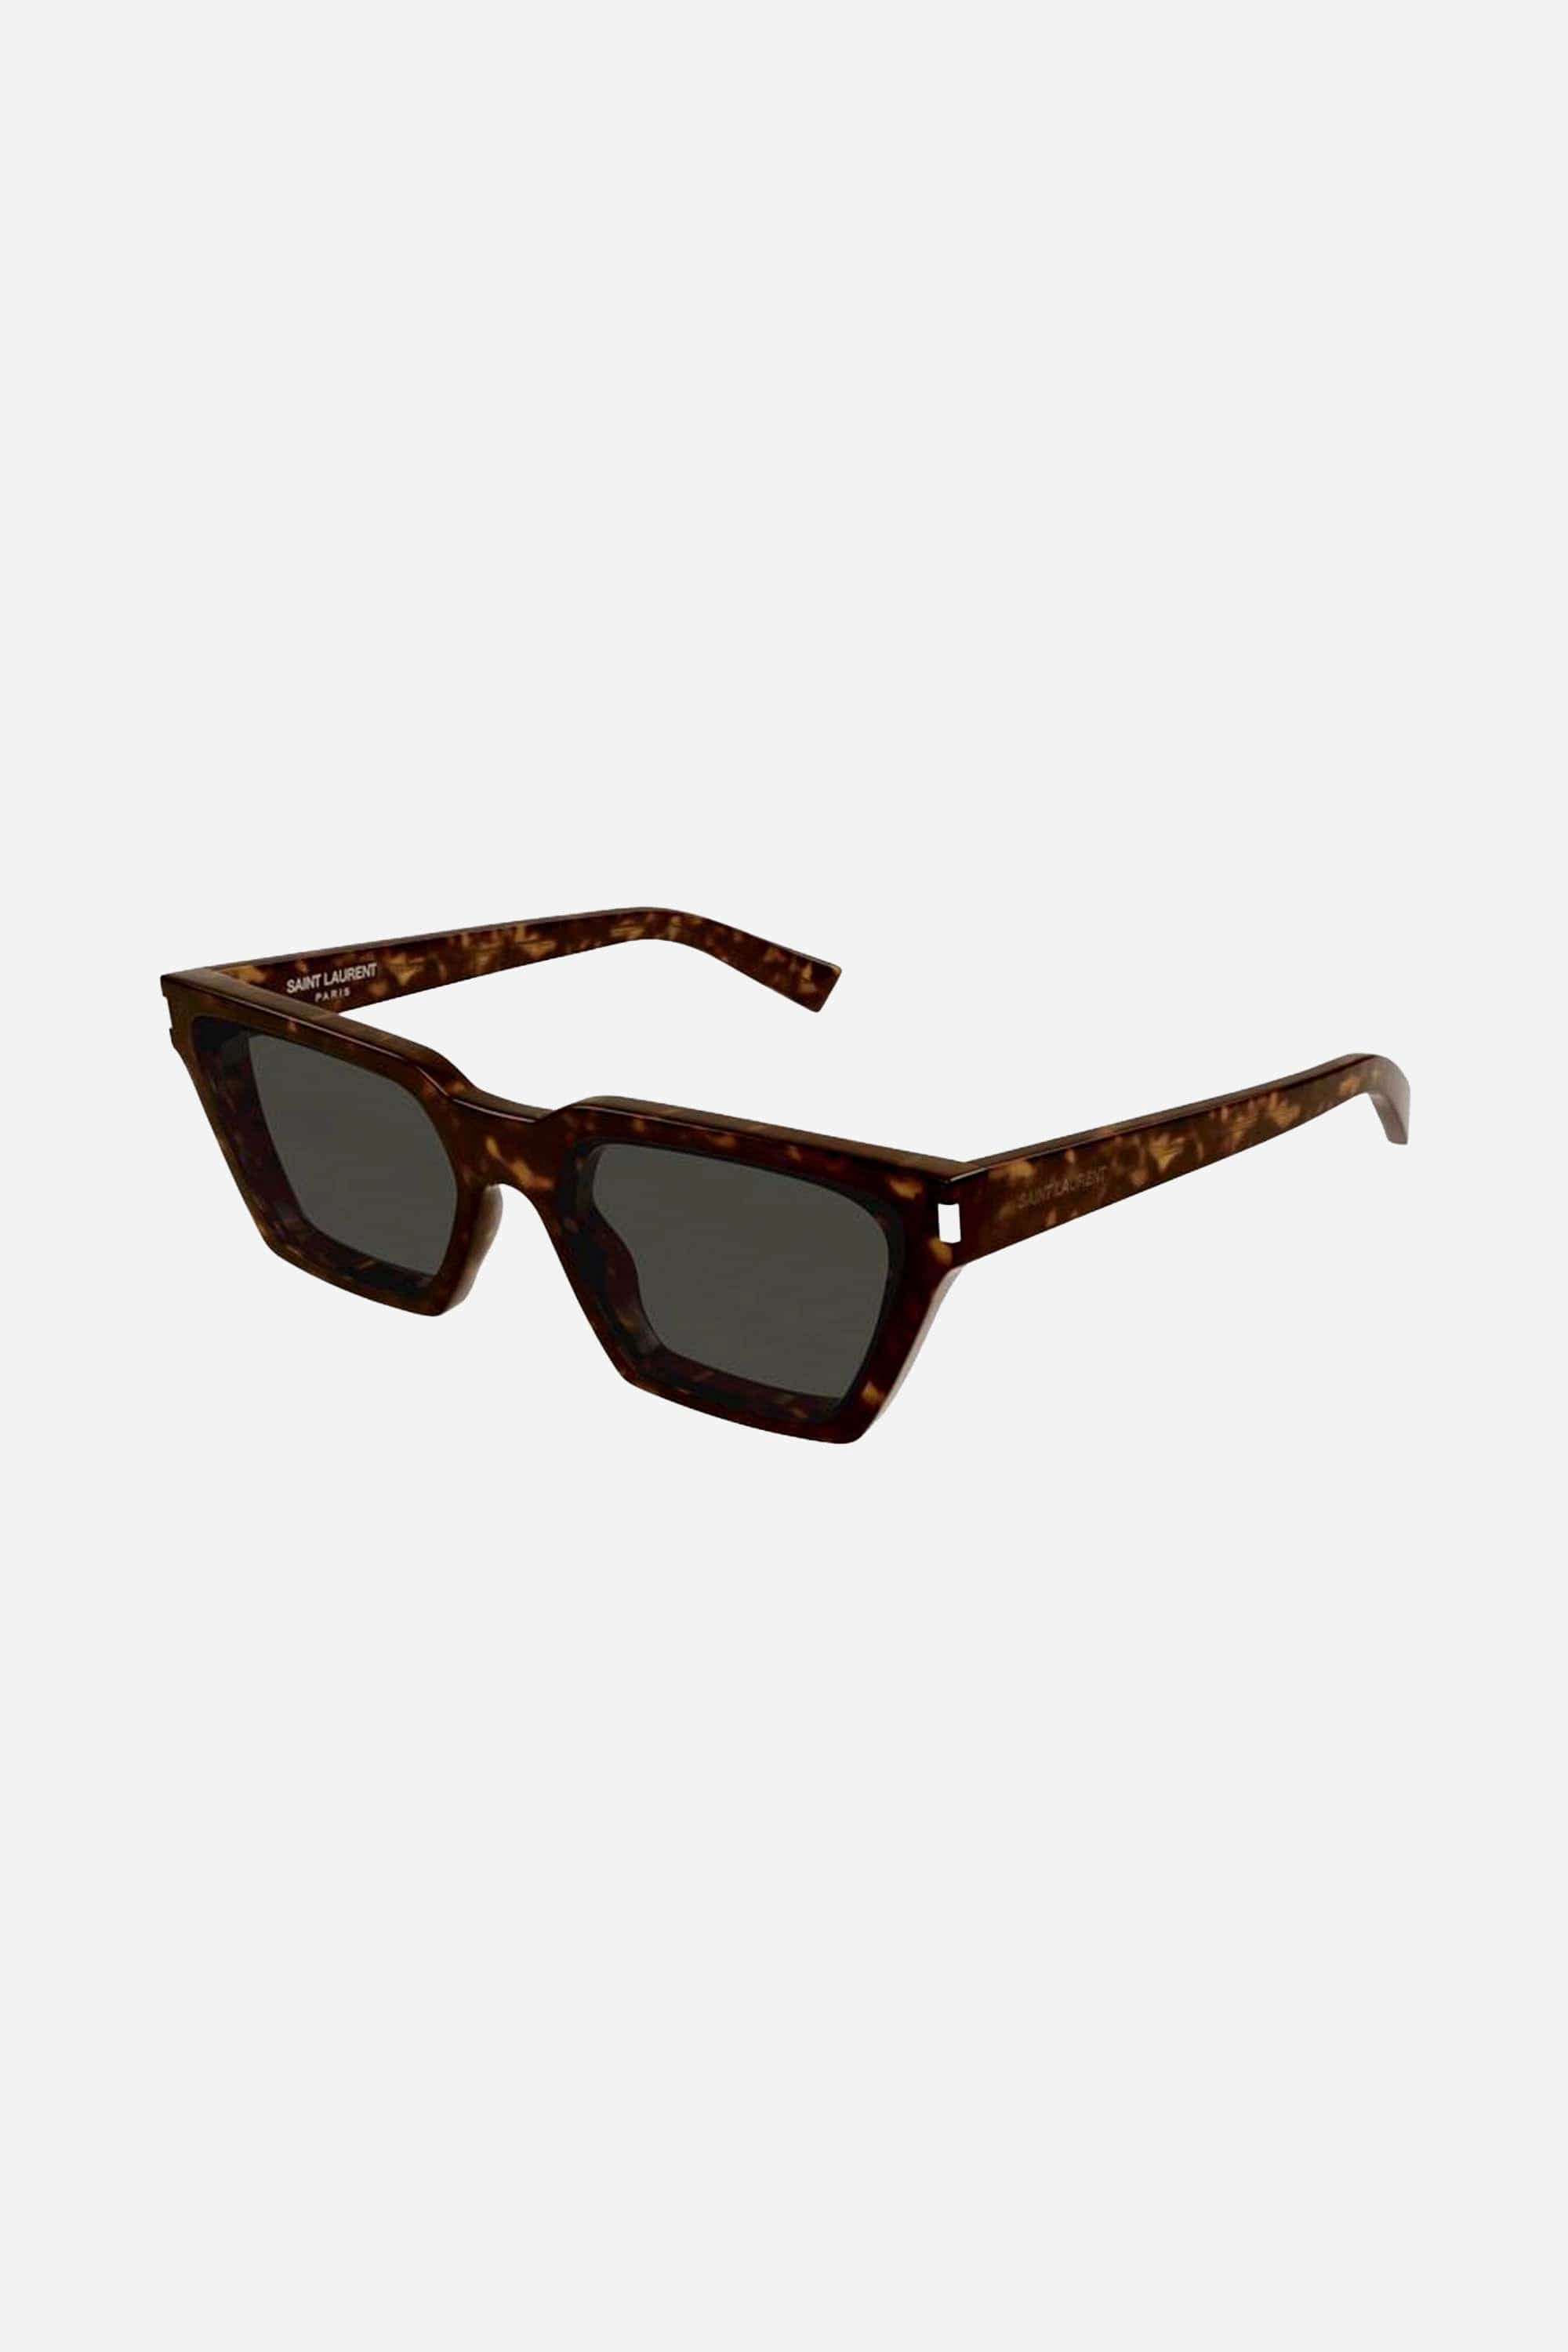 Saint Laurent CALISTA cat eye dark havana sunglasses - Eyewear Club